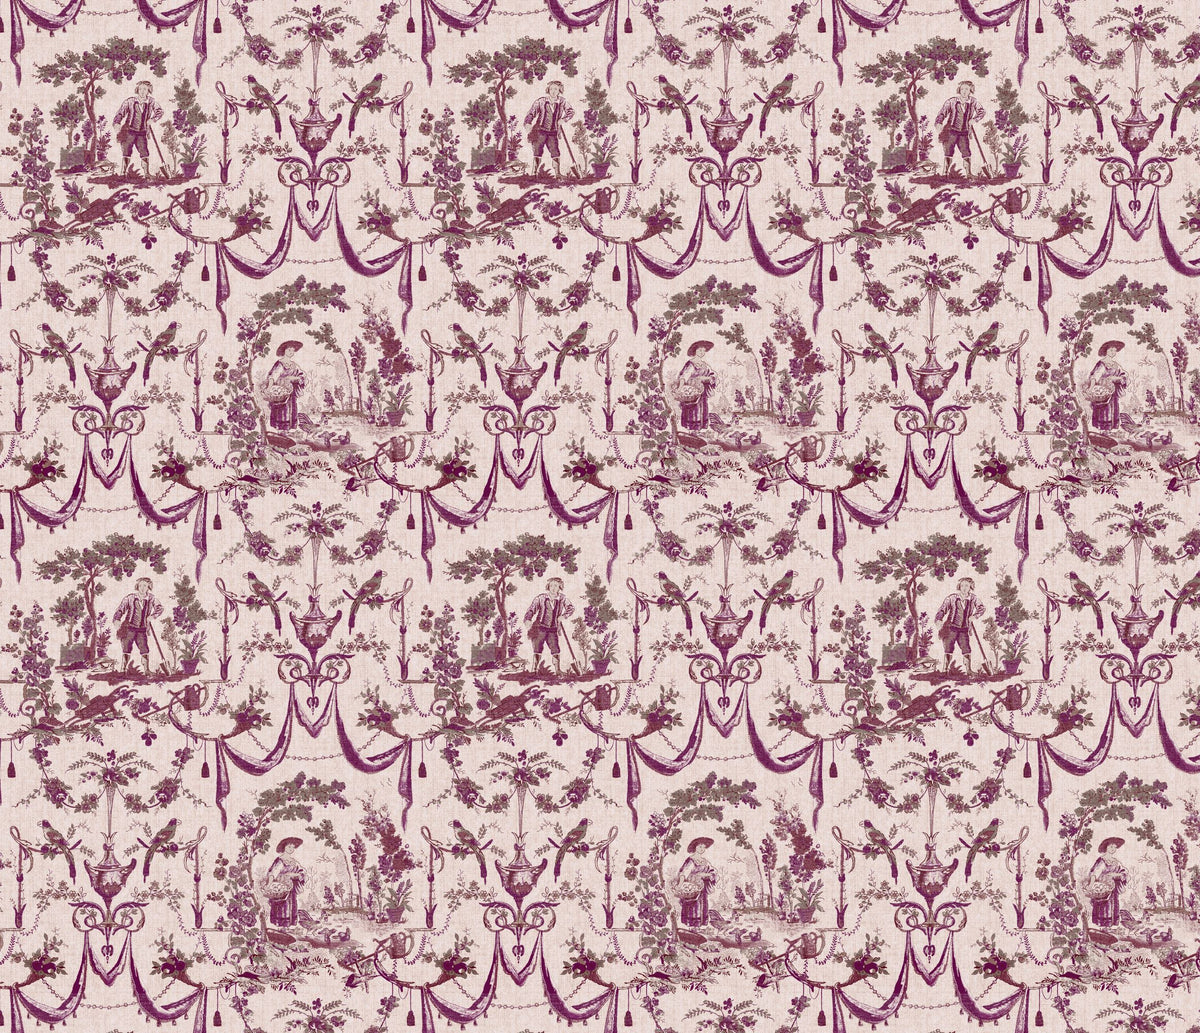 Toile Design Fabric - Gardener Pink